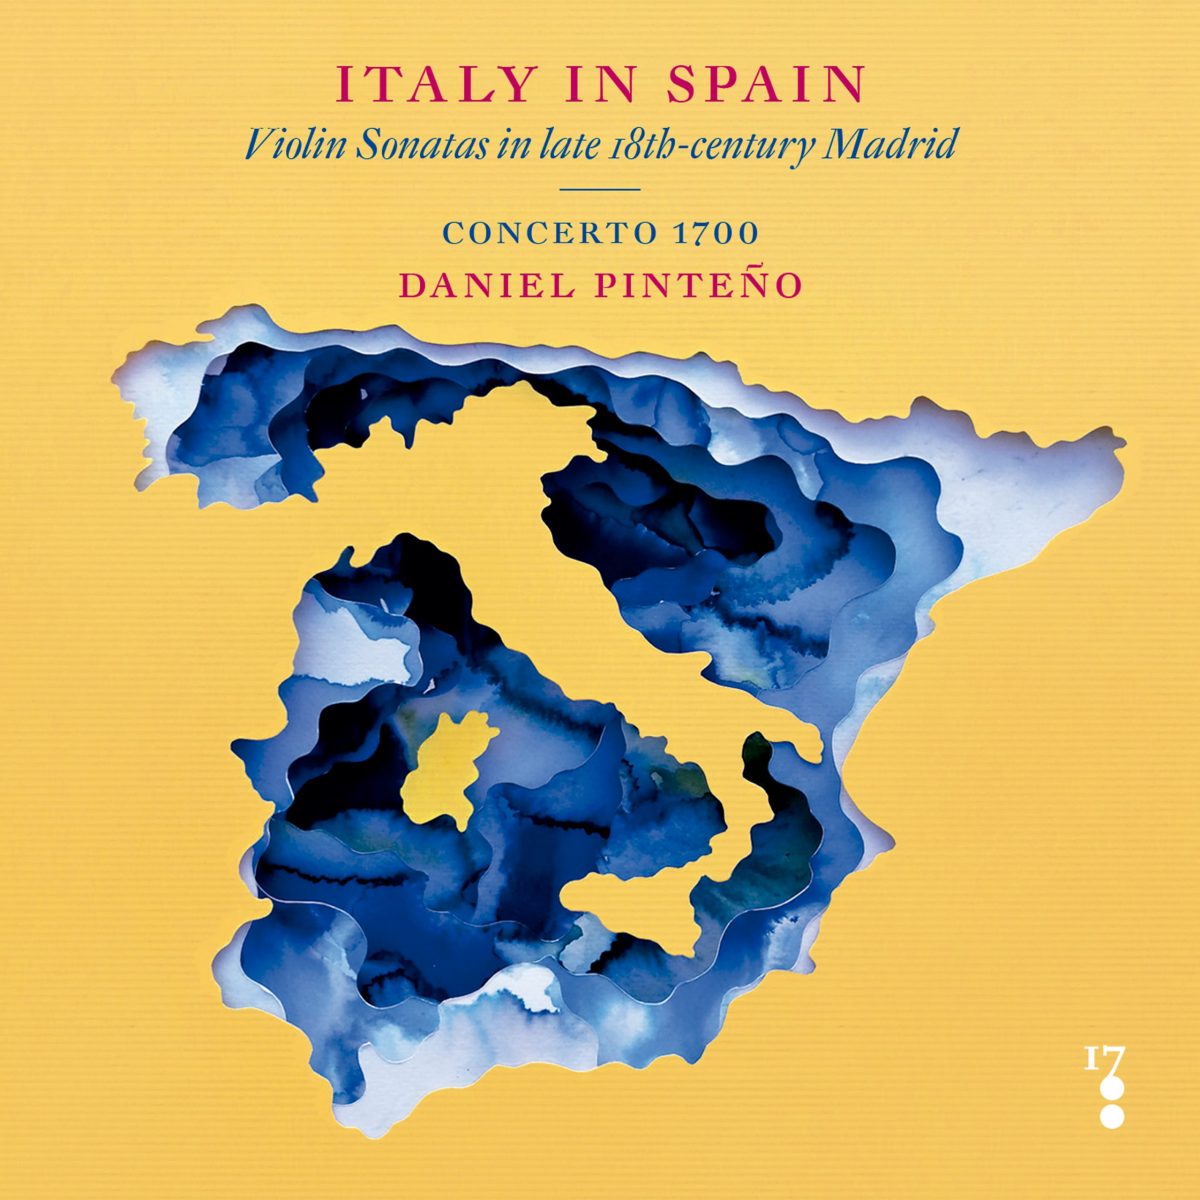 ITALY IN SPAIN: Violin Sonatas in late 18th-century Madrid